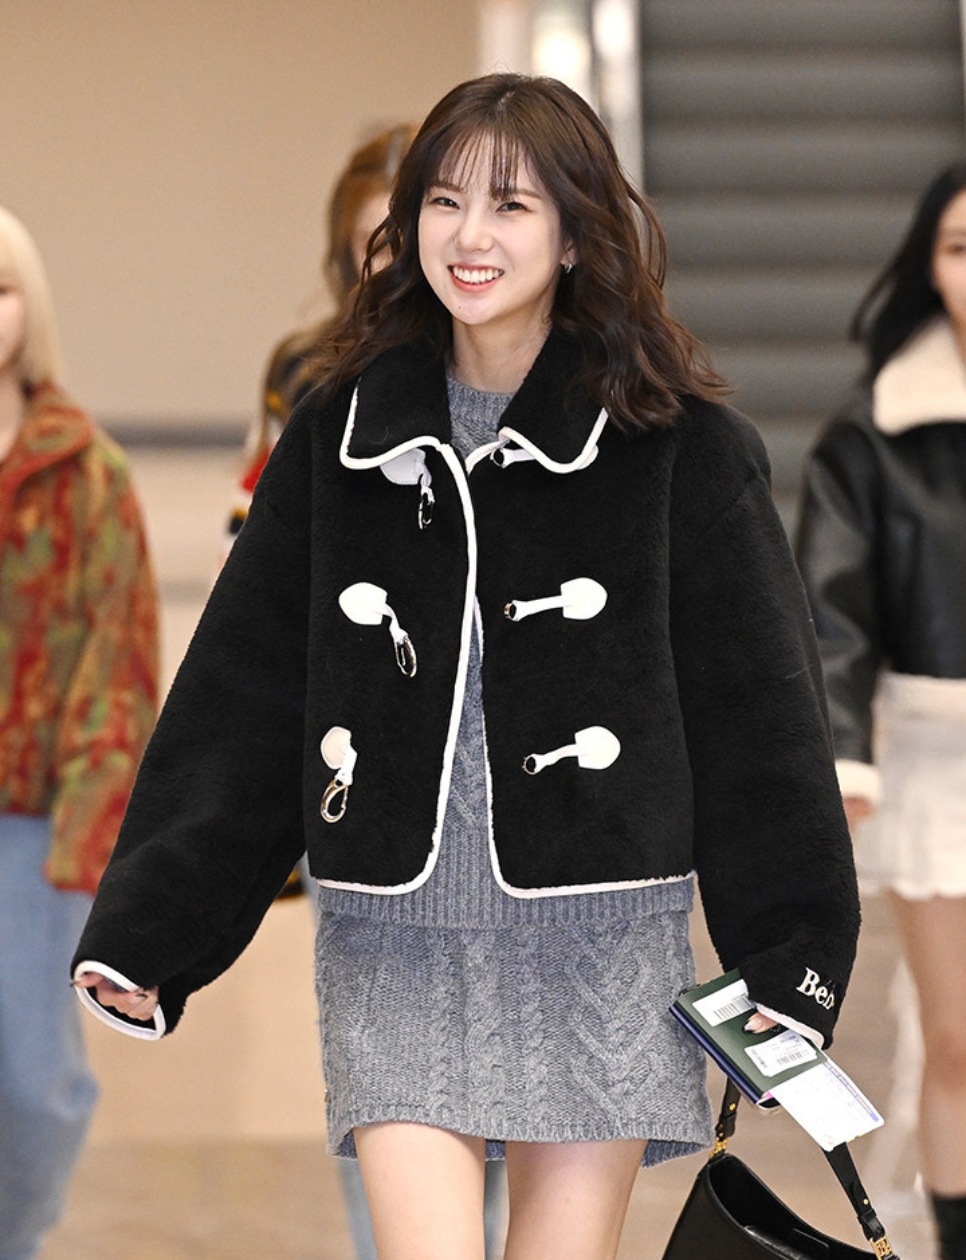 Choi Yujin dari Kep1er yang memakai koleksi Bébé (Noirnine) dalam airport fashion-nya